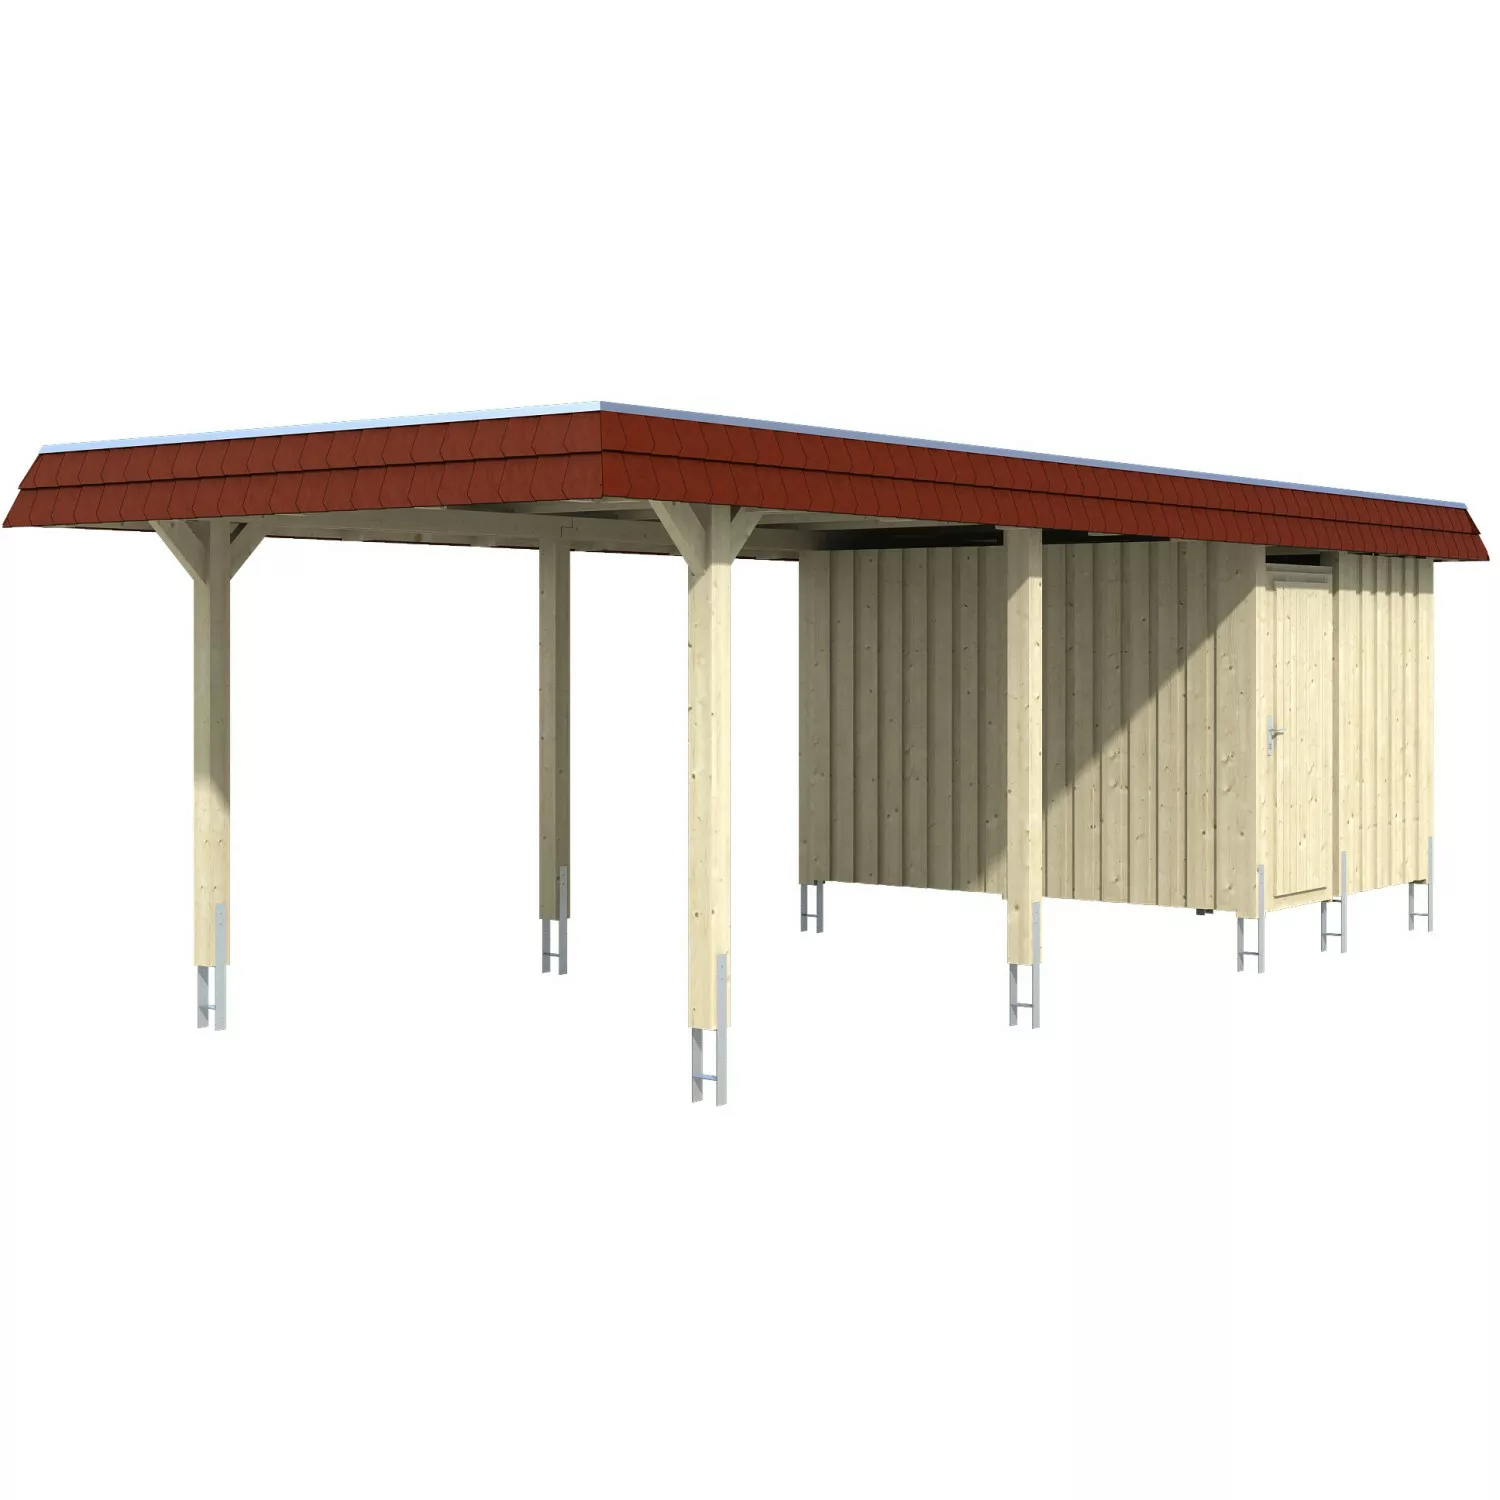 Skan Holz Carport Wendland Eiche hell + Anbau 362 x 870 cm Alu-Dach Blende günstig online kaufen